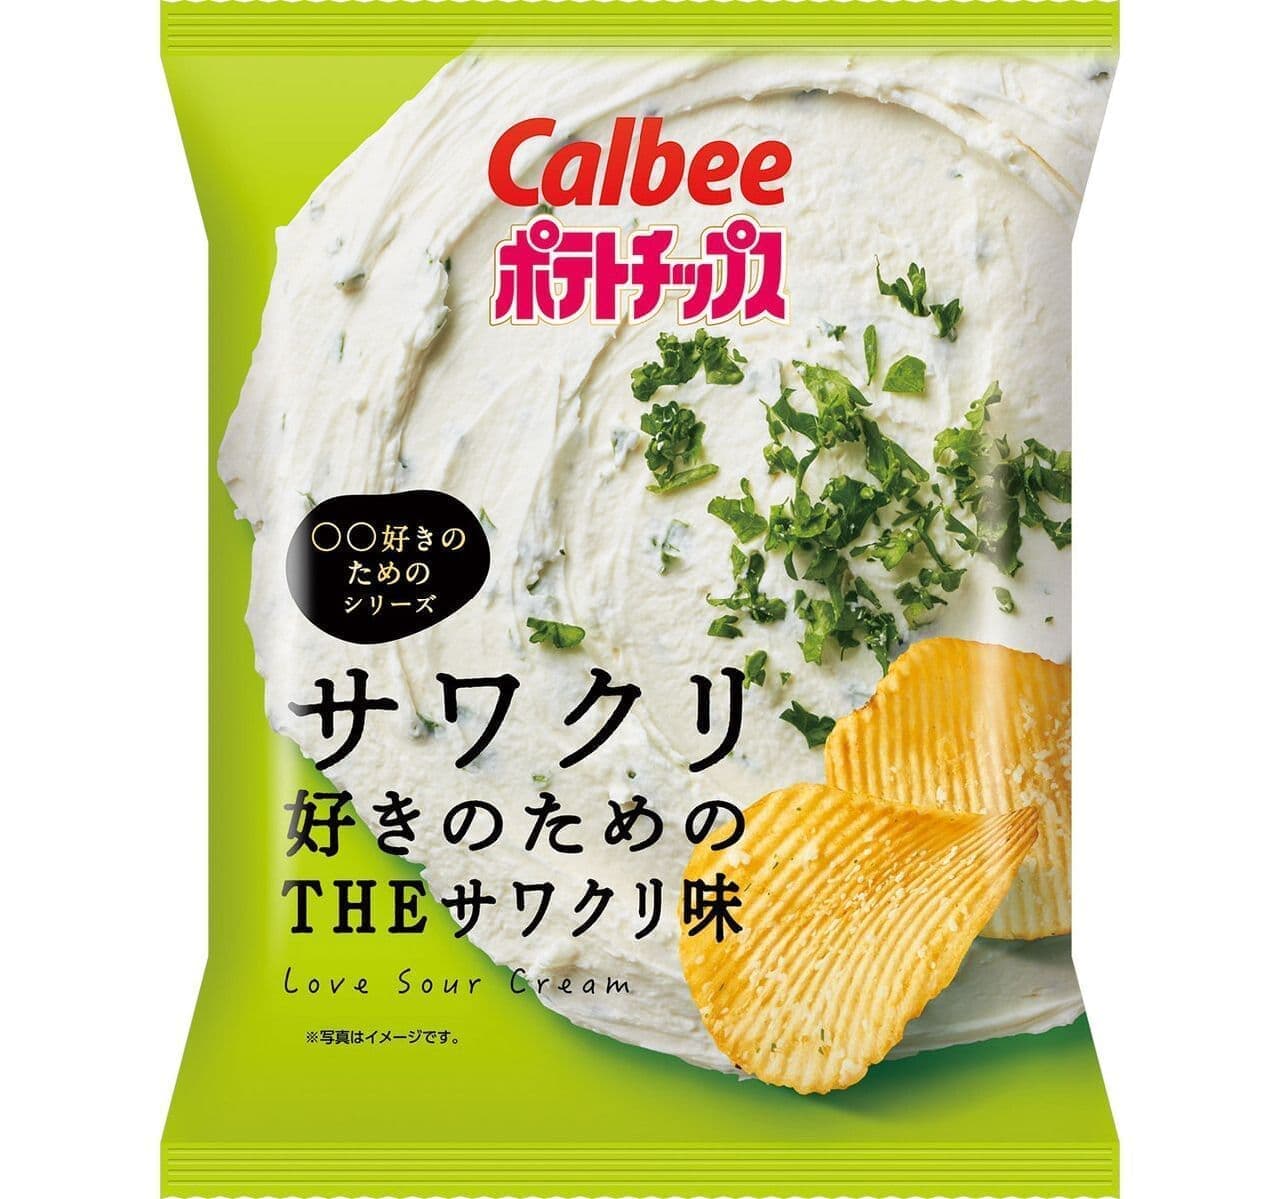 Lawson "Potato Chips THE Sawakuri Flavor for Sawakuri Lovers"